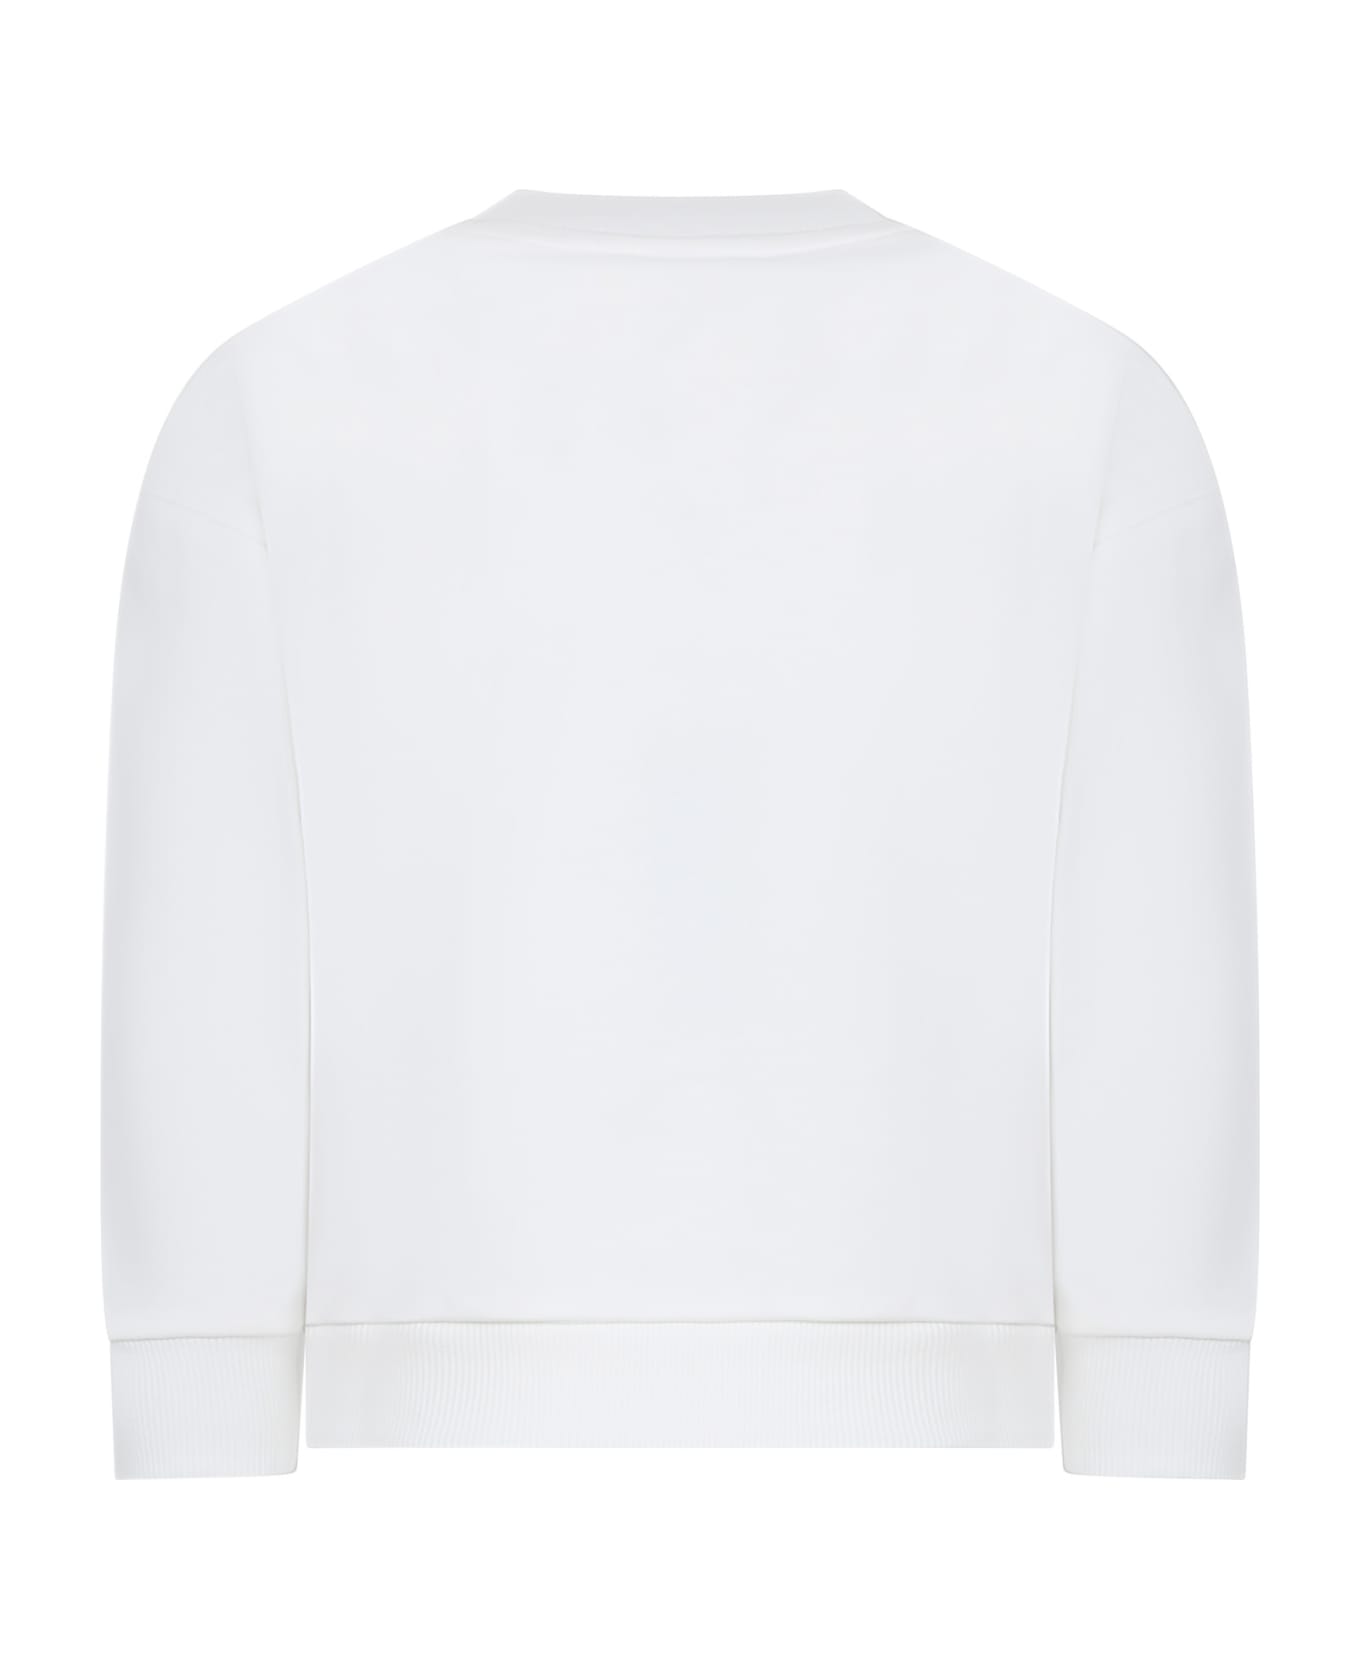 Kenzo Kids Ivory Sweatshirt For Boy With Logo - Ivory